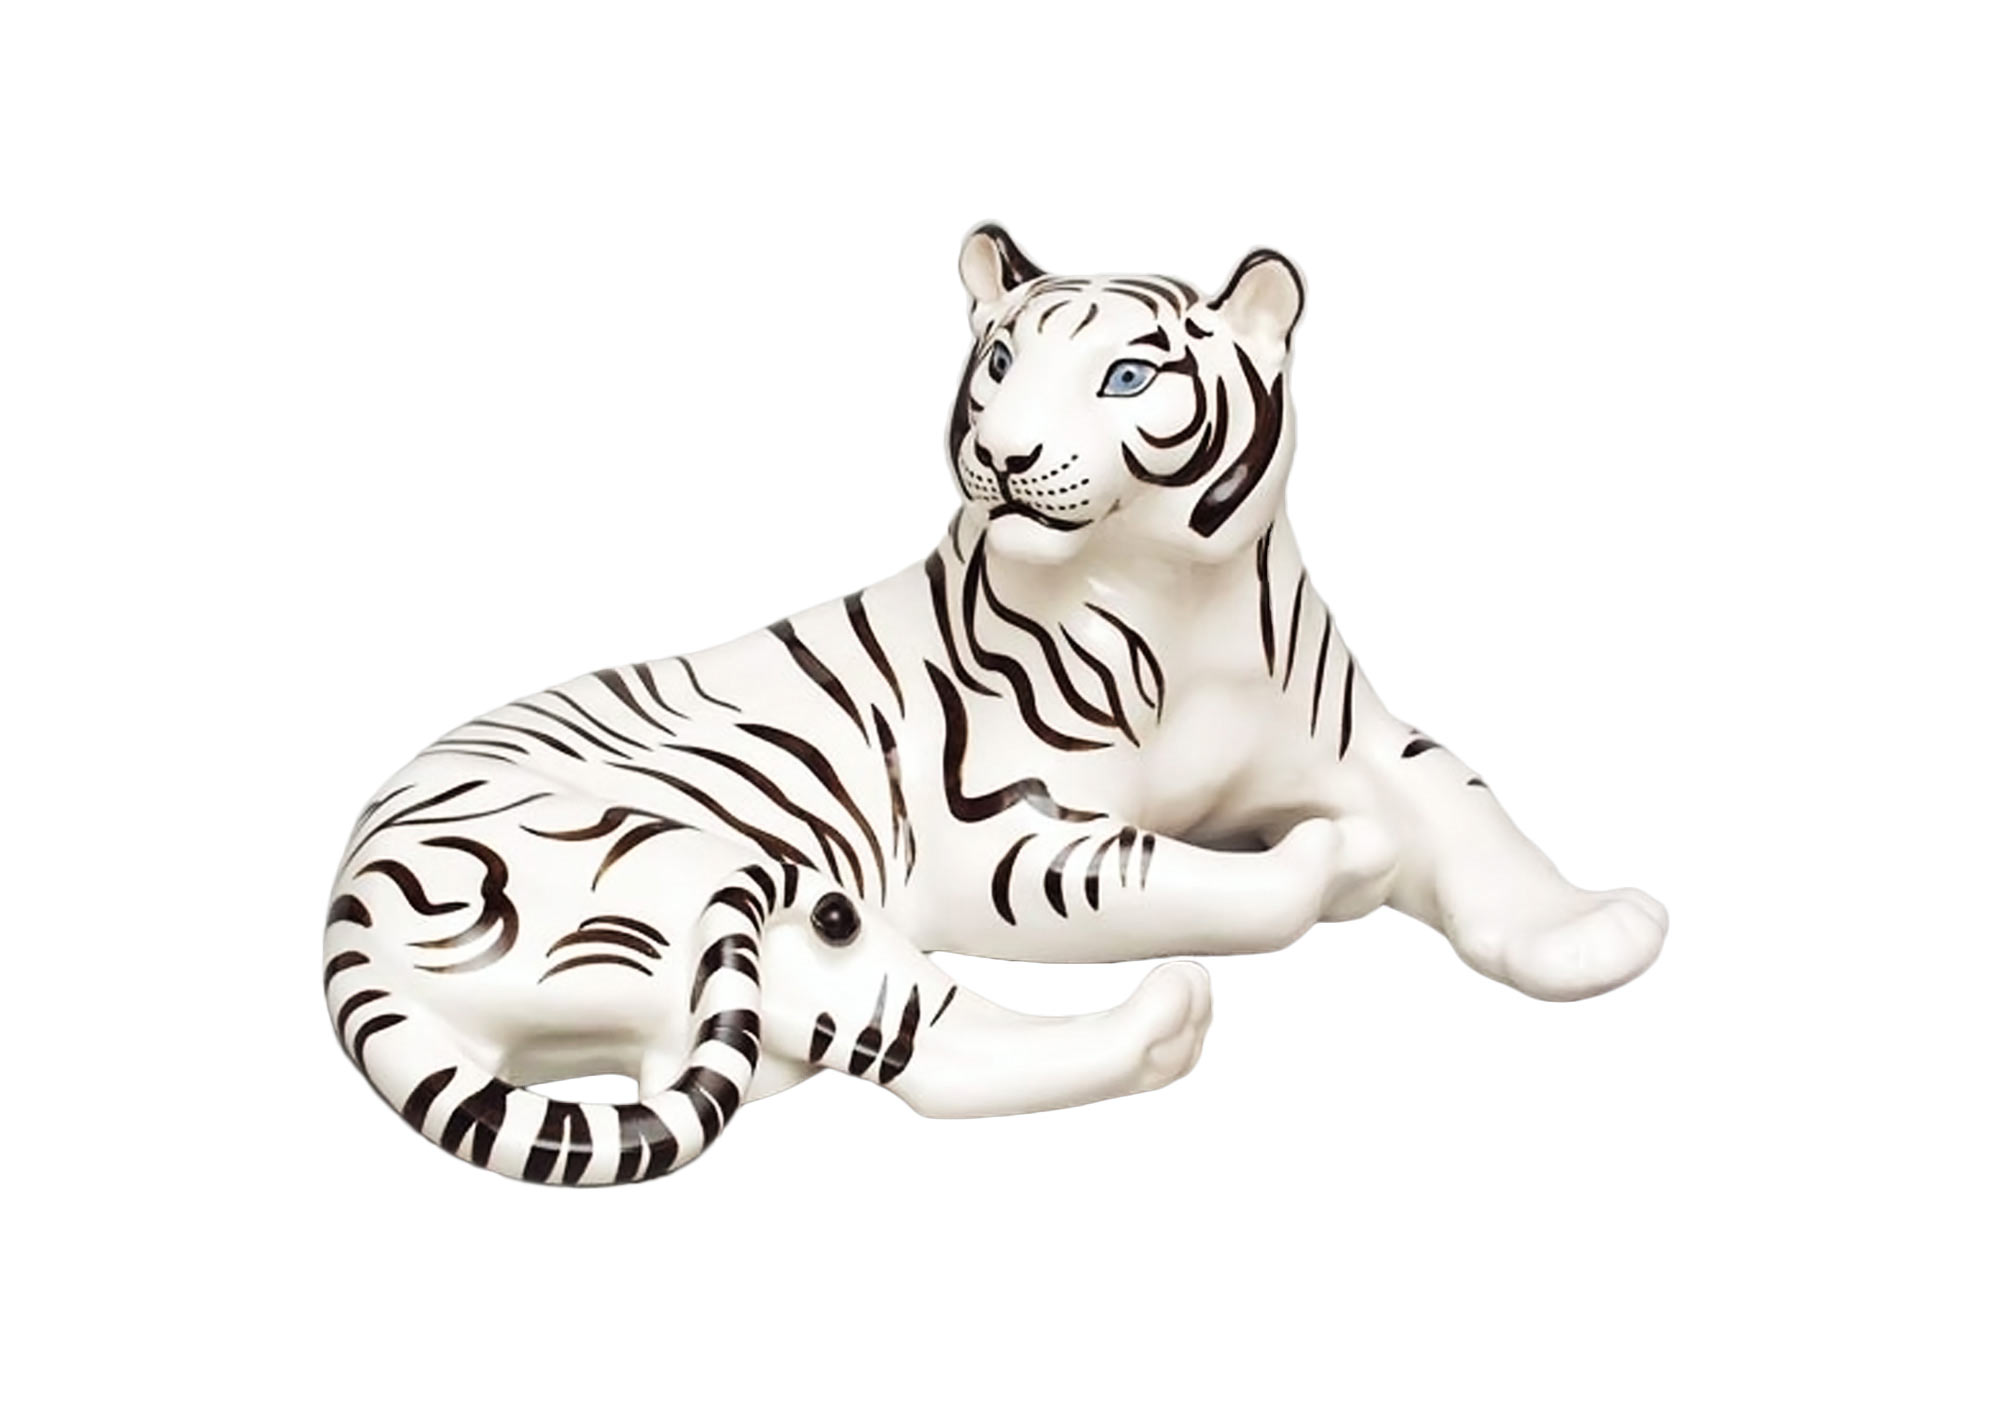 Buy White Tiger Sculpture at GoldenCockerel.com